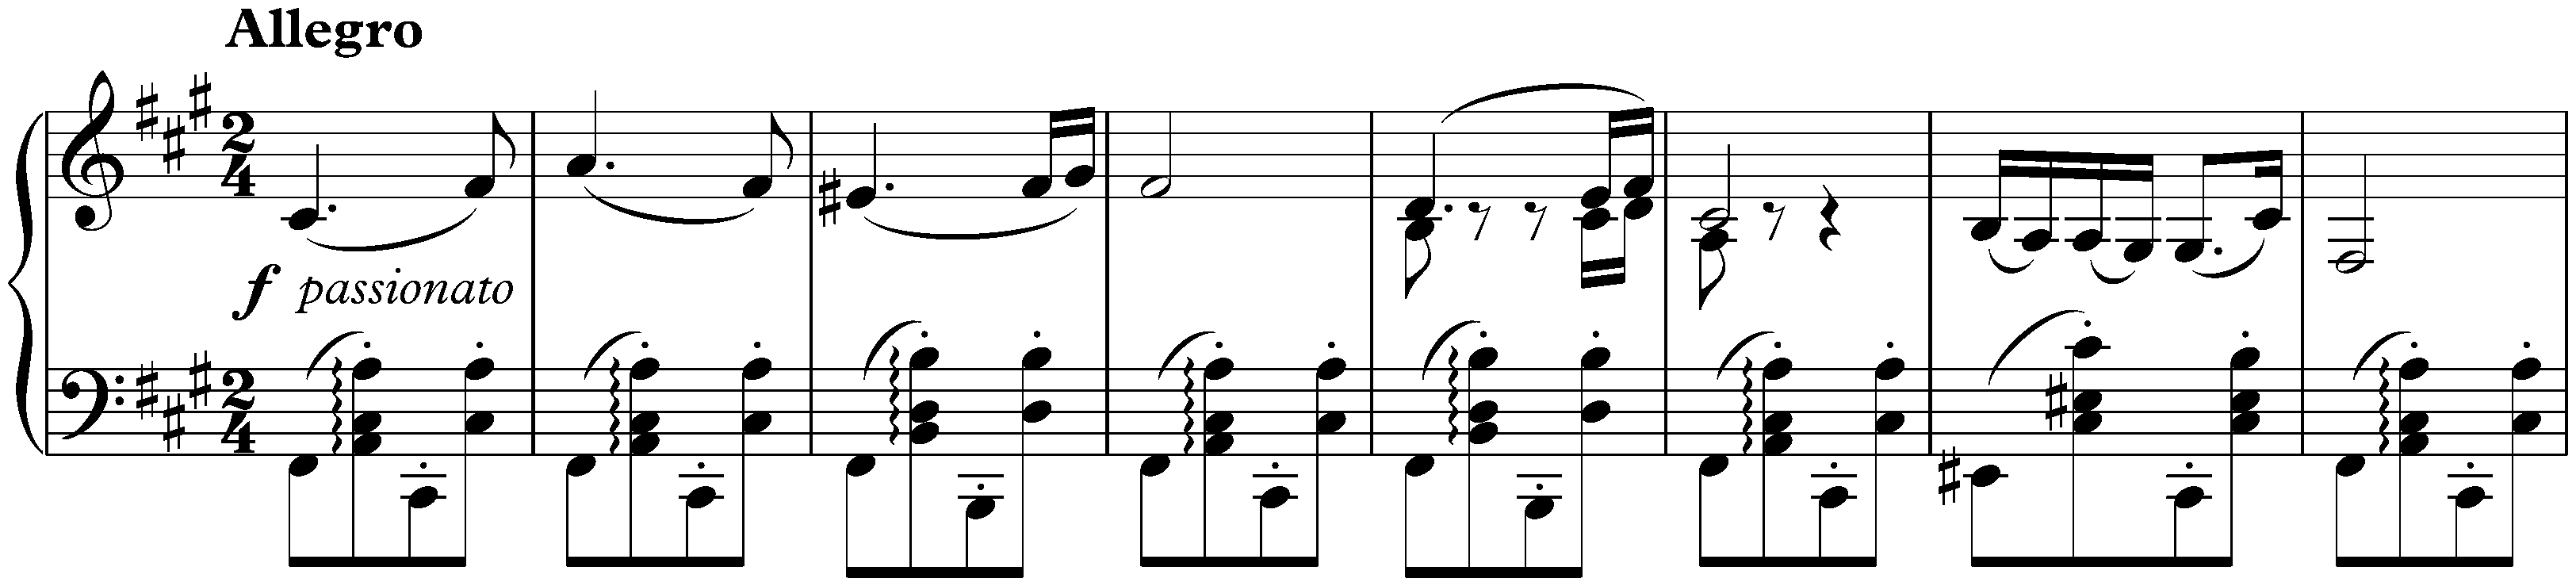 Hungarian Dances, WoO 1; 5. F-sharp minor